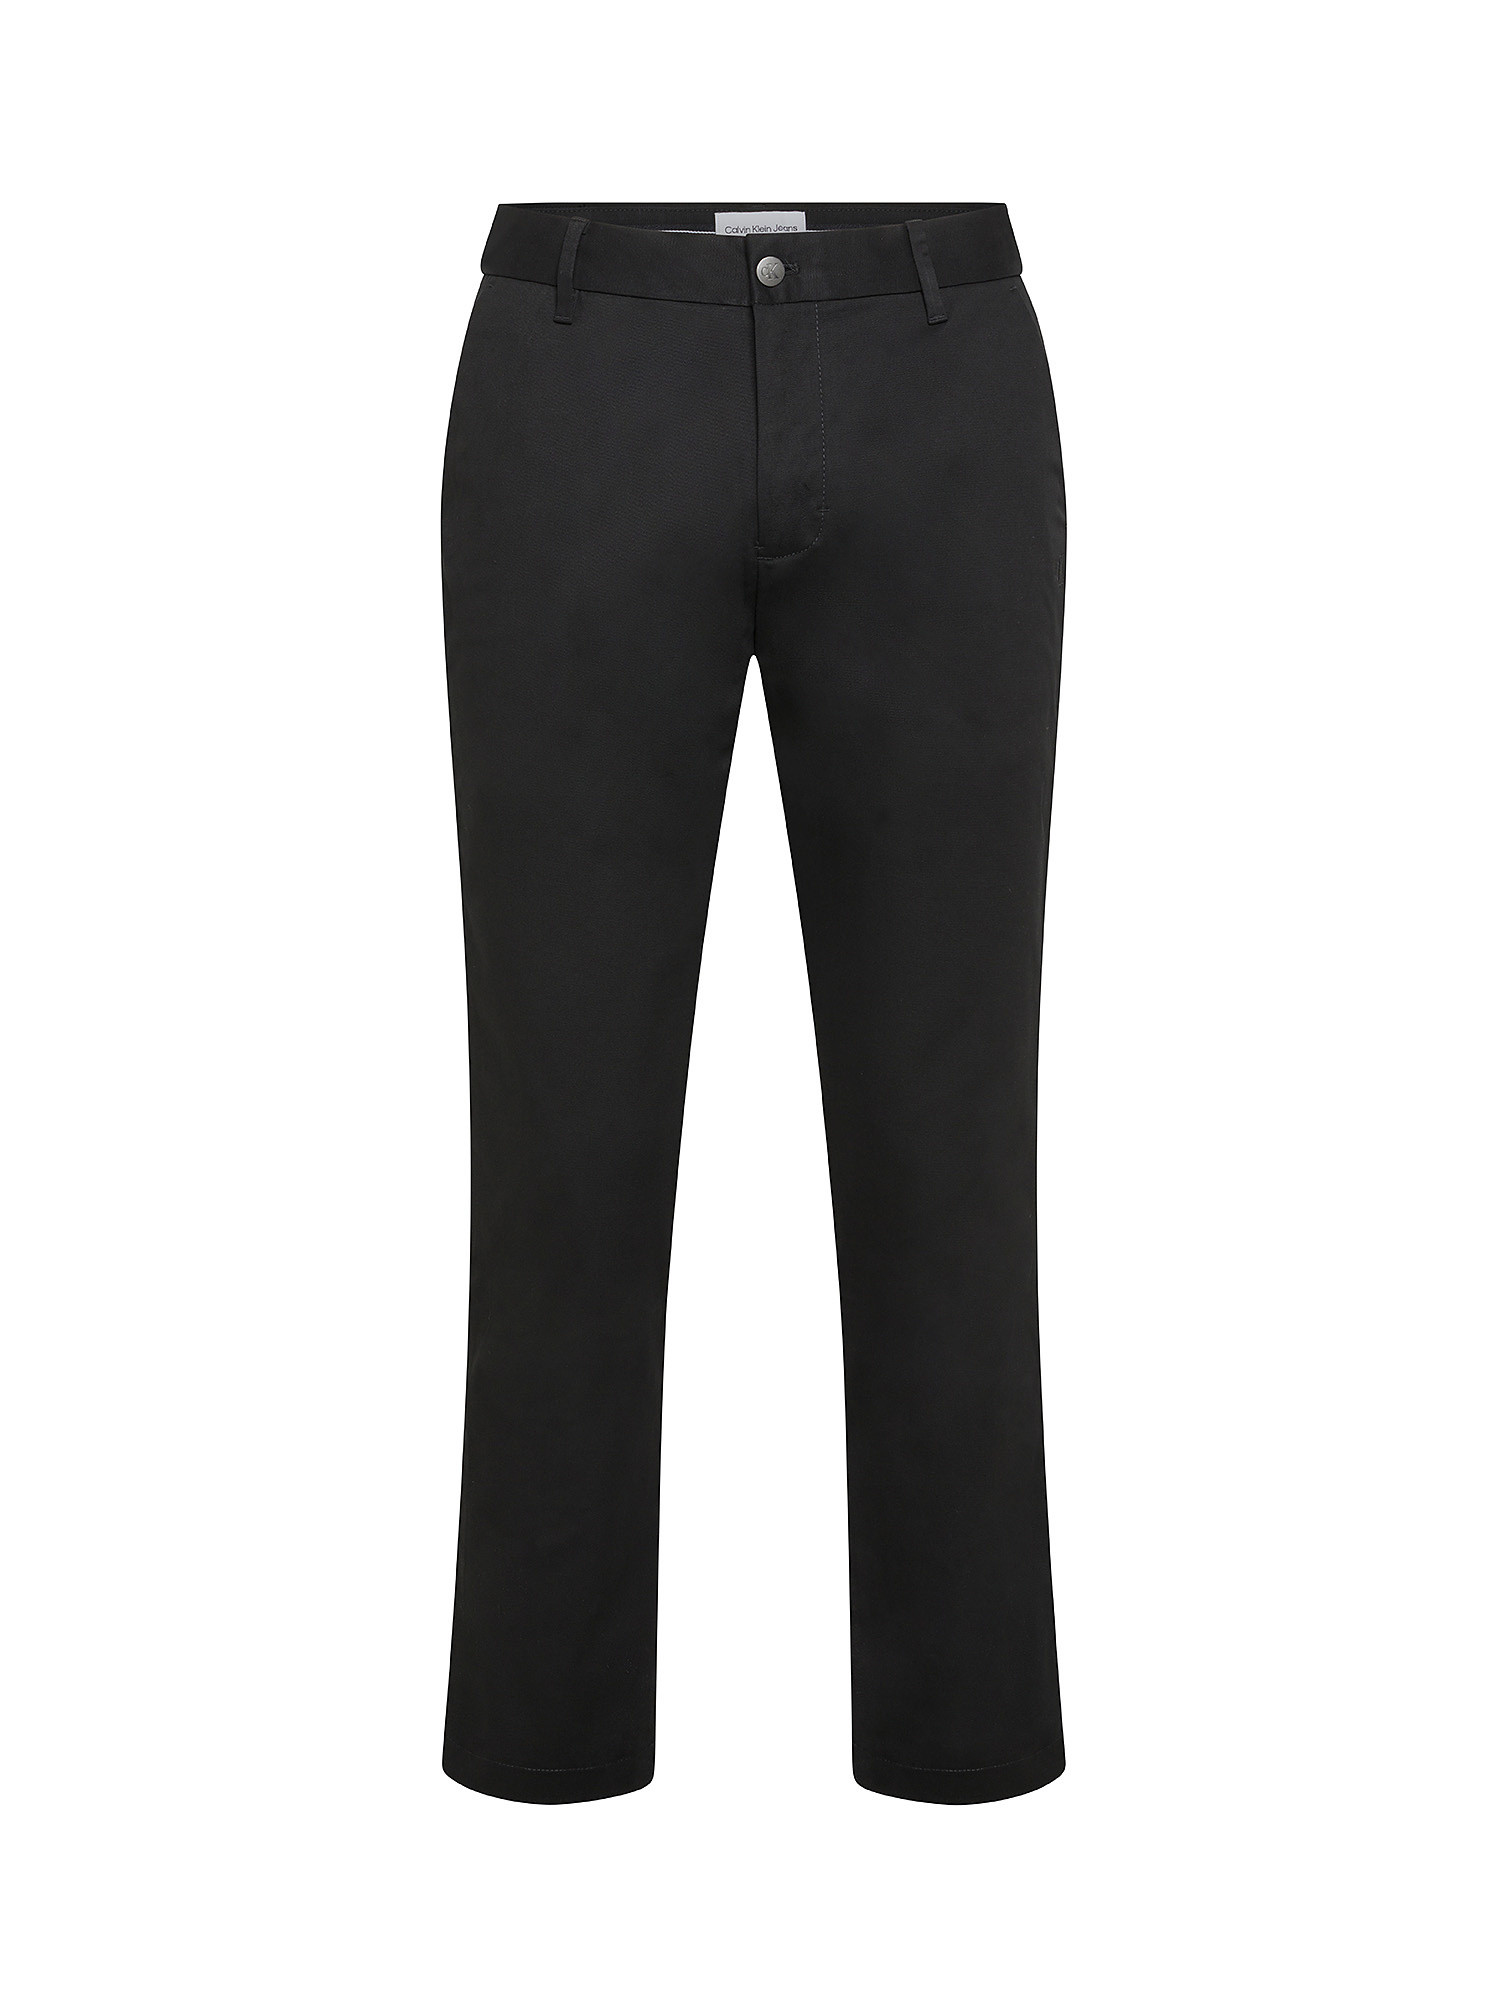 Calvin Klein Jeans - Pantaloni slim fit, Nero, large image number 0